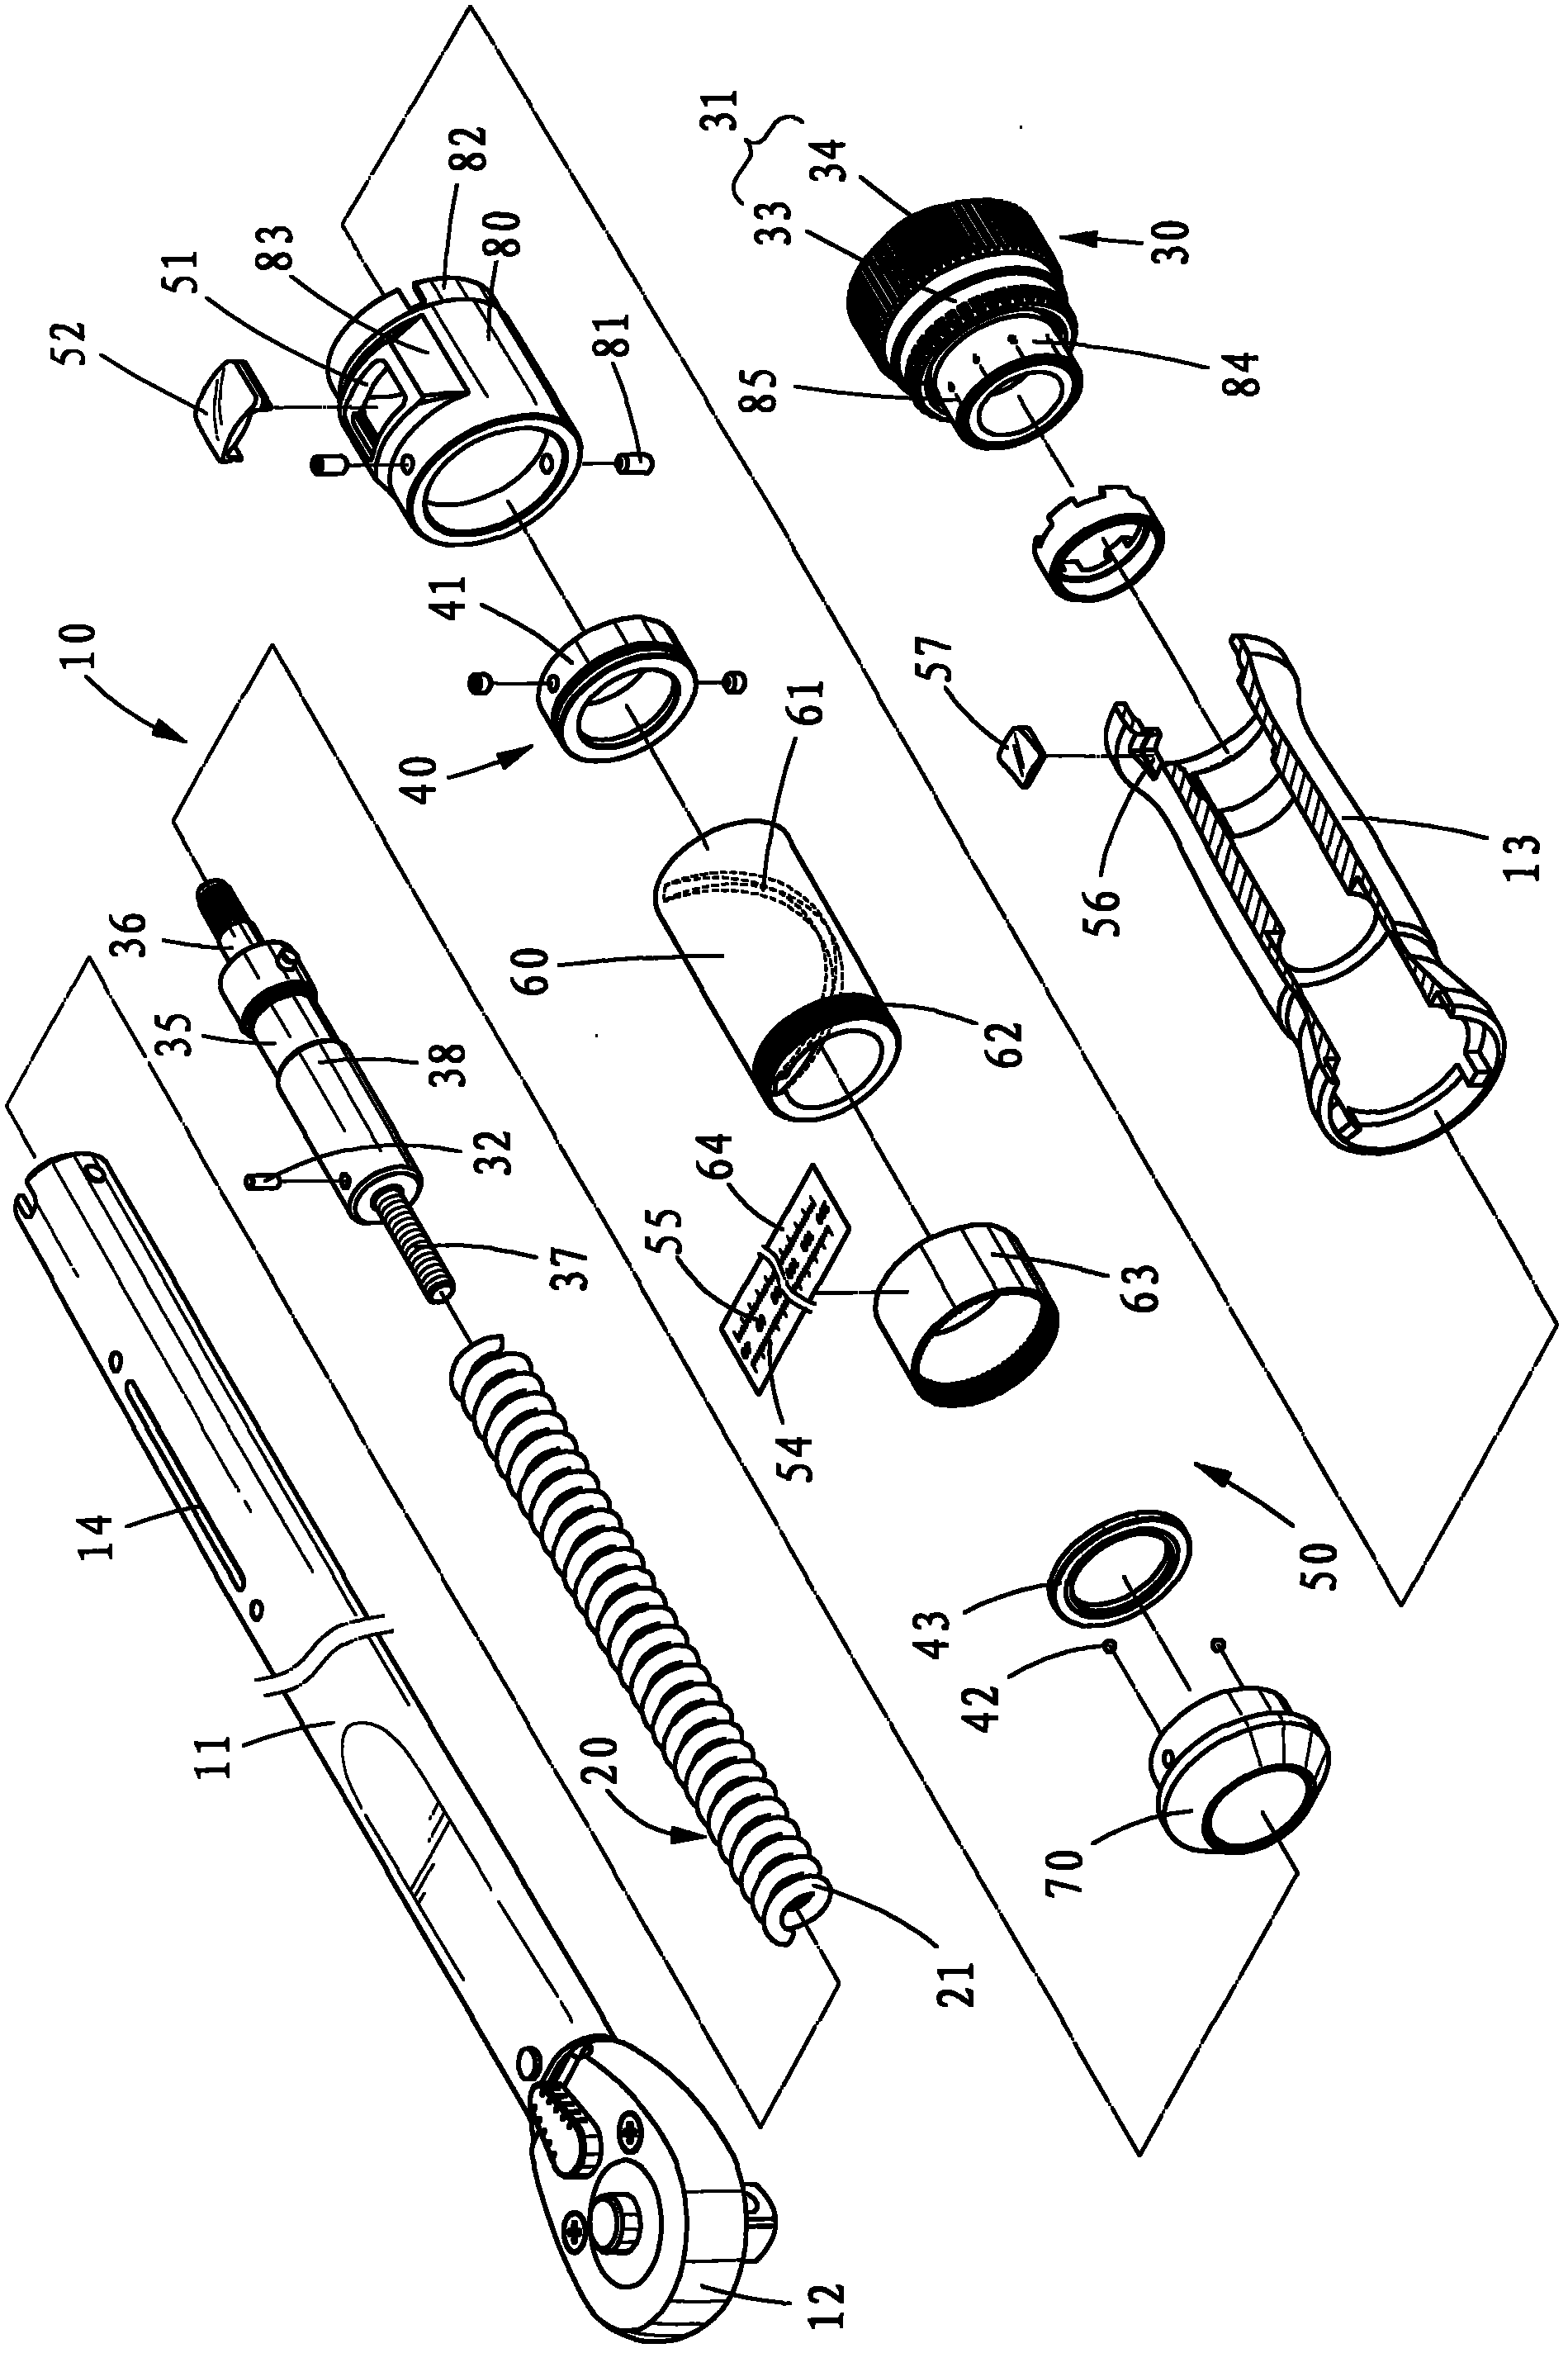 Torque measuring mechanism for spanner